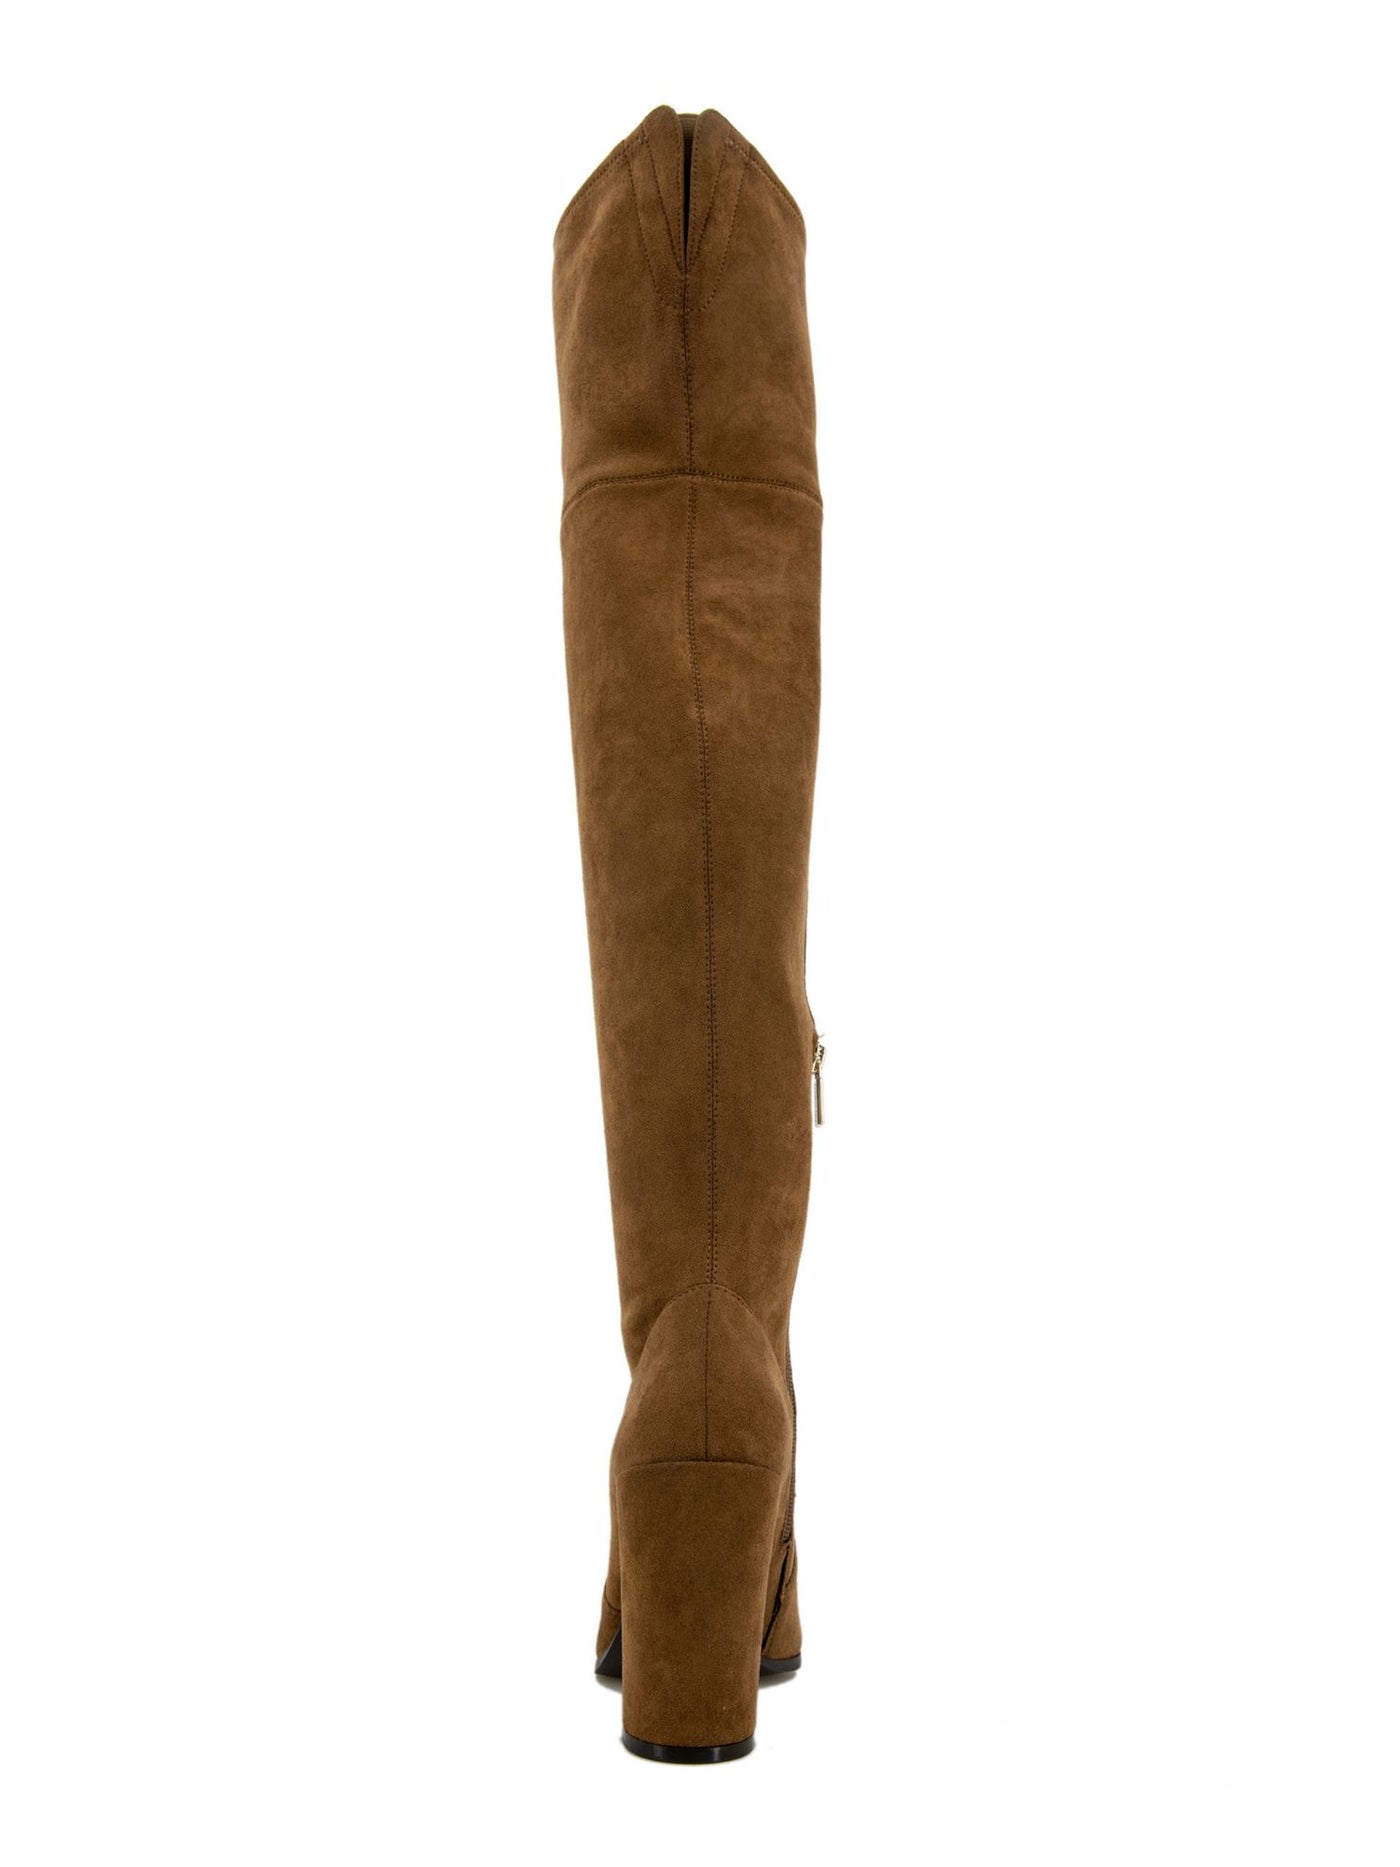 KENNETH COLE NEW YORK Womens Brown Inside Half Zip Justin Round Toe Block Heel Dress Boots 5 M